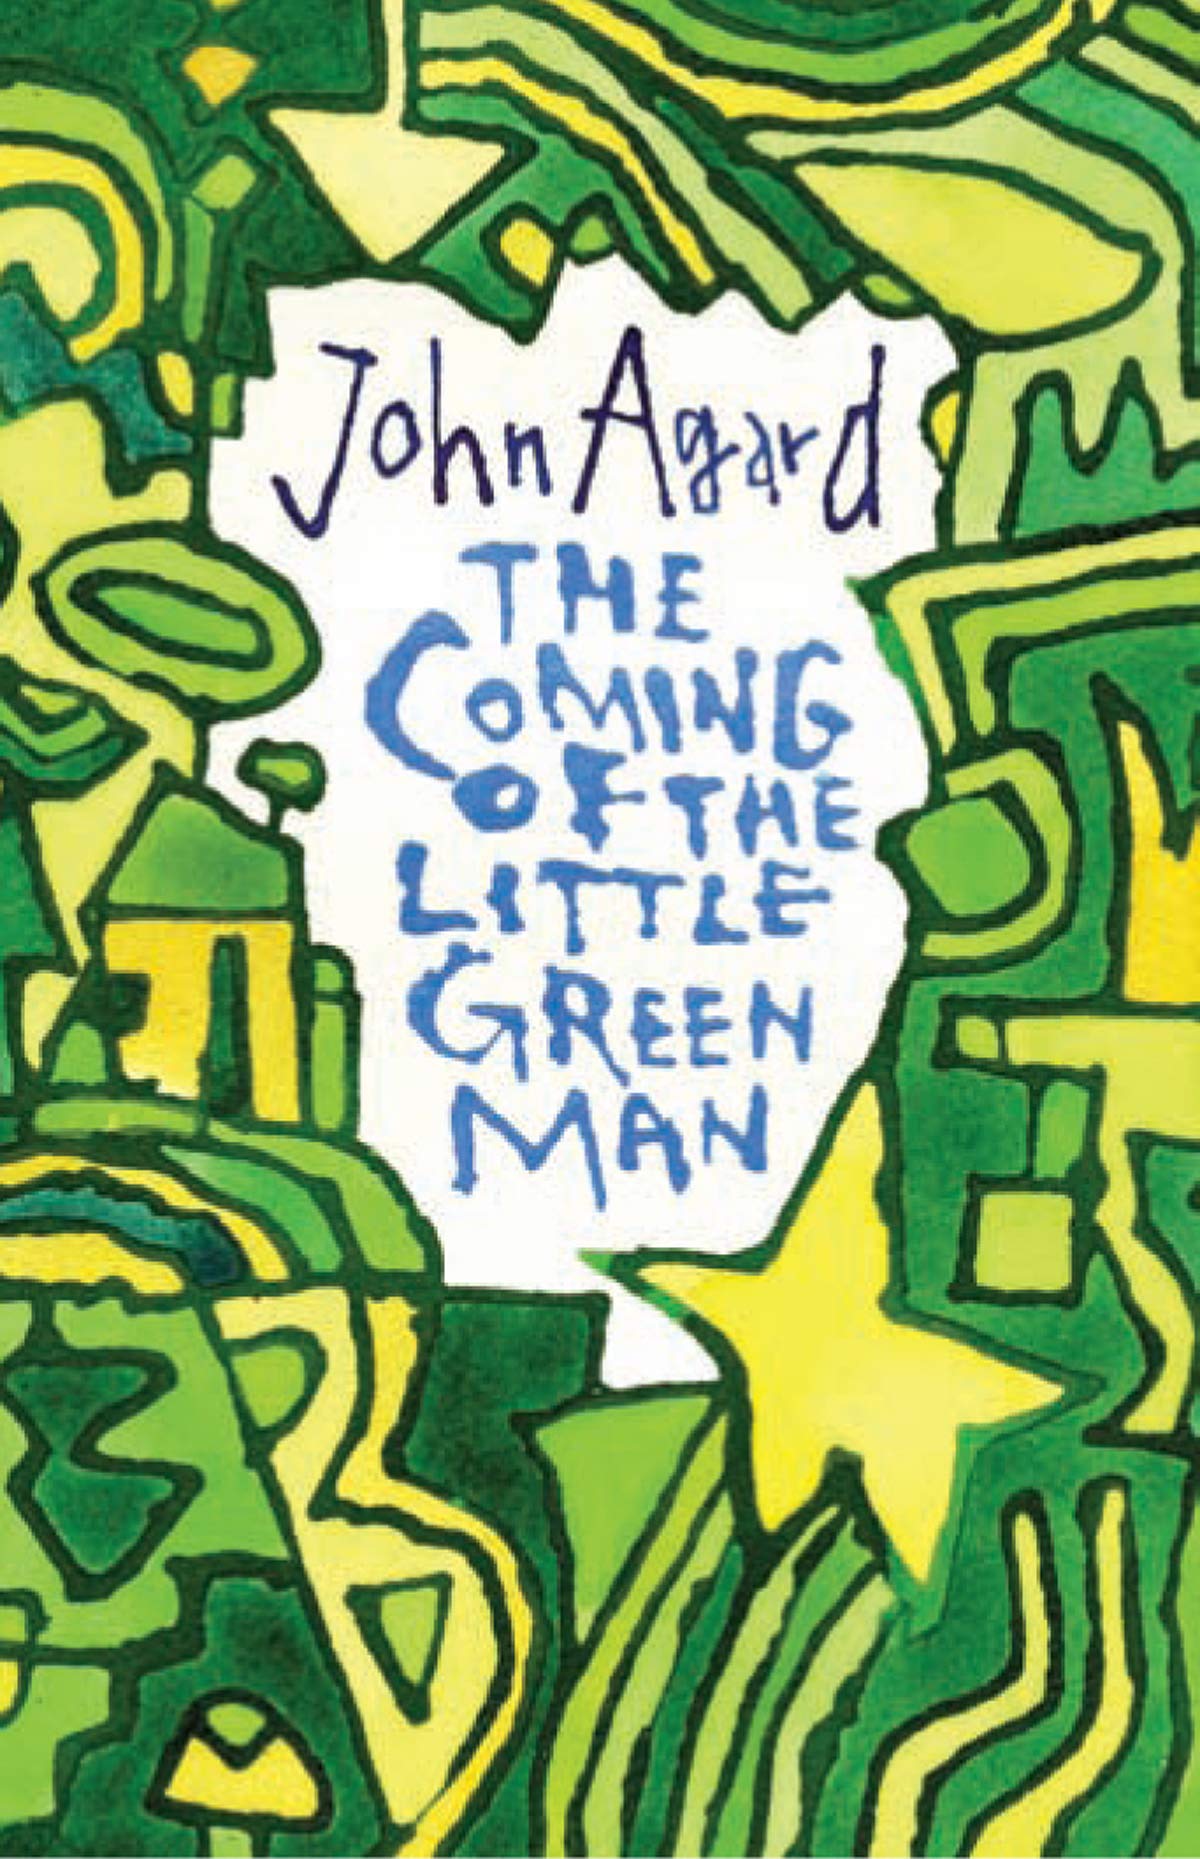 Little Green Man Logo - The Coming of the Little Green Man: Amazon.co.uk: John Agard